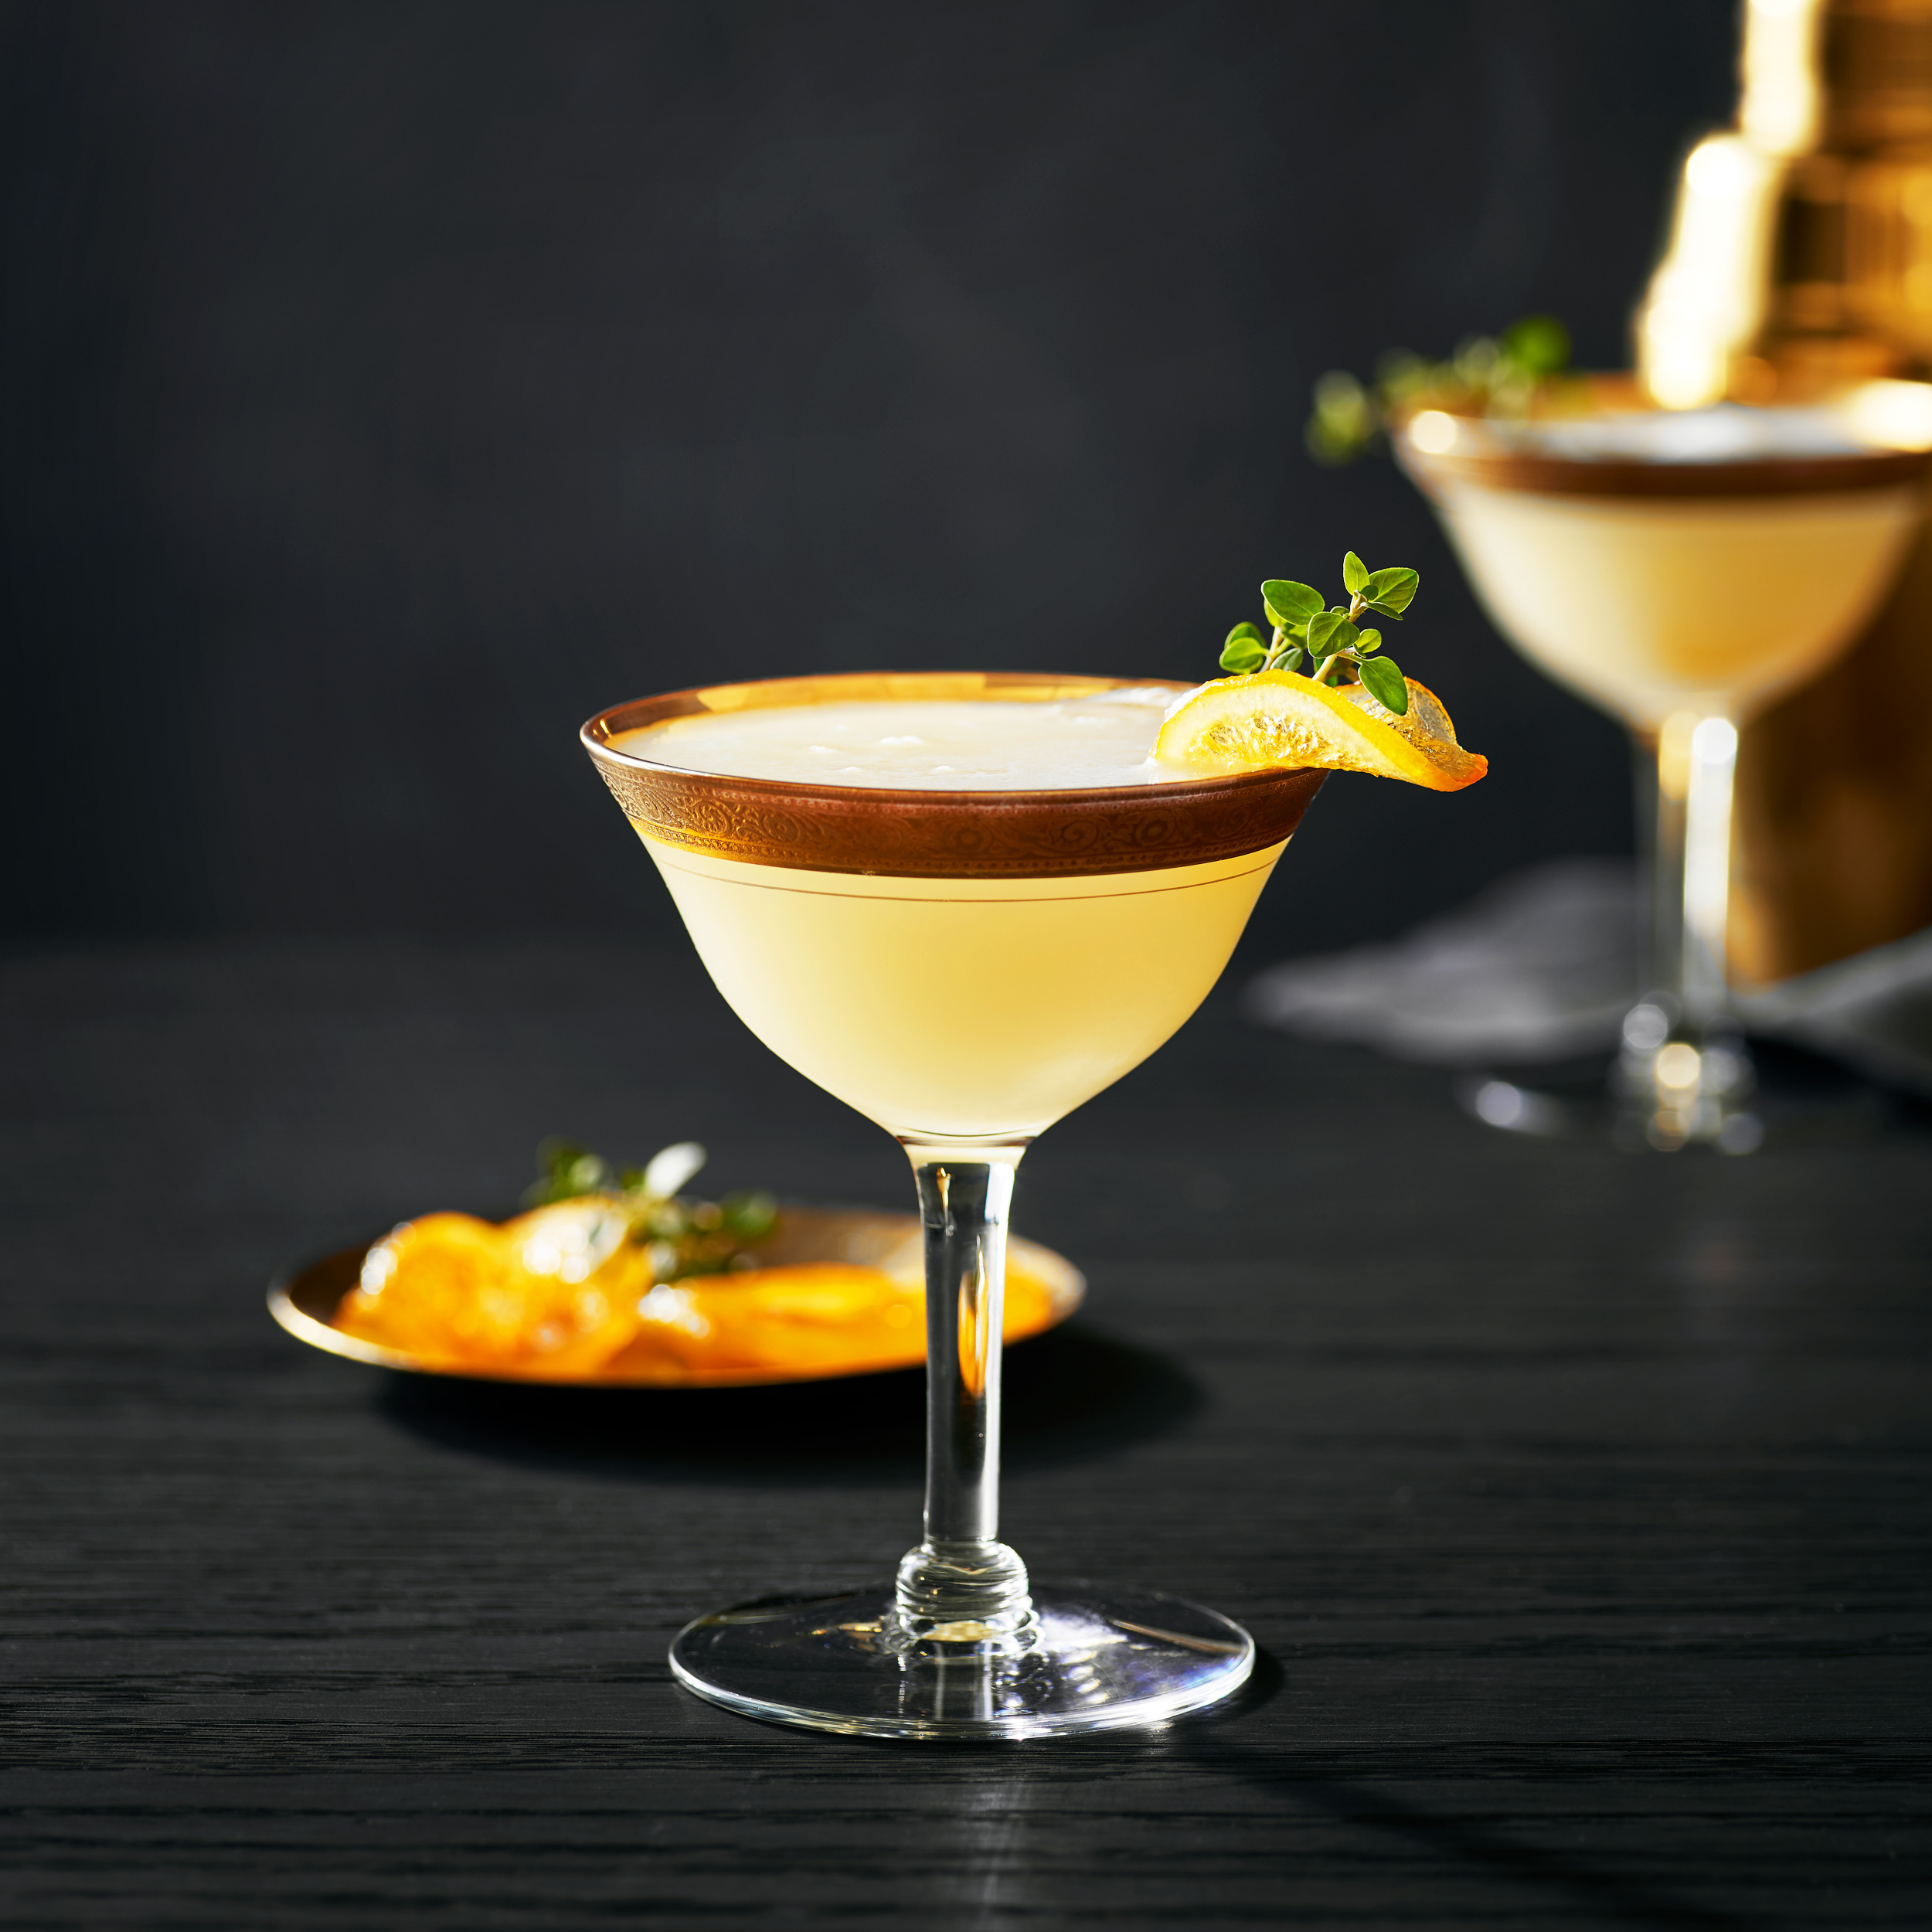 Annabelle_Breakey_Beverage_Photographer_Food_Photography_Lemon-Cocktail